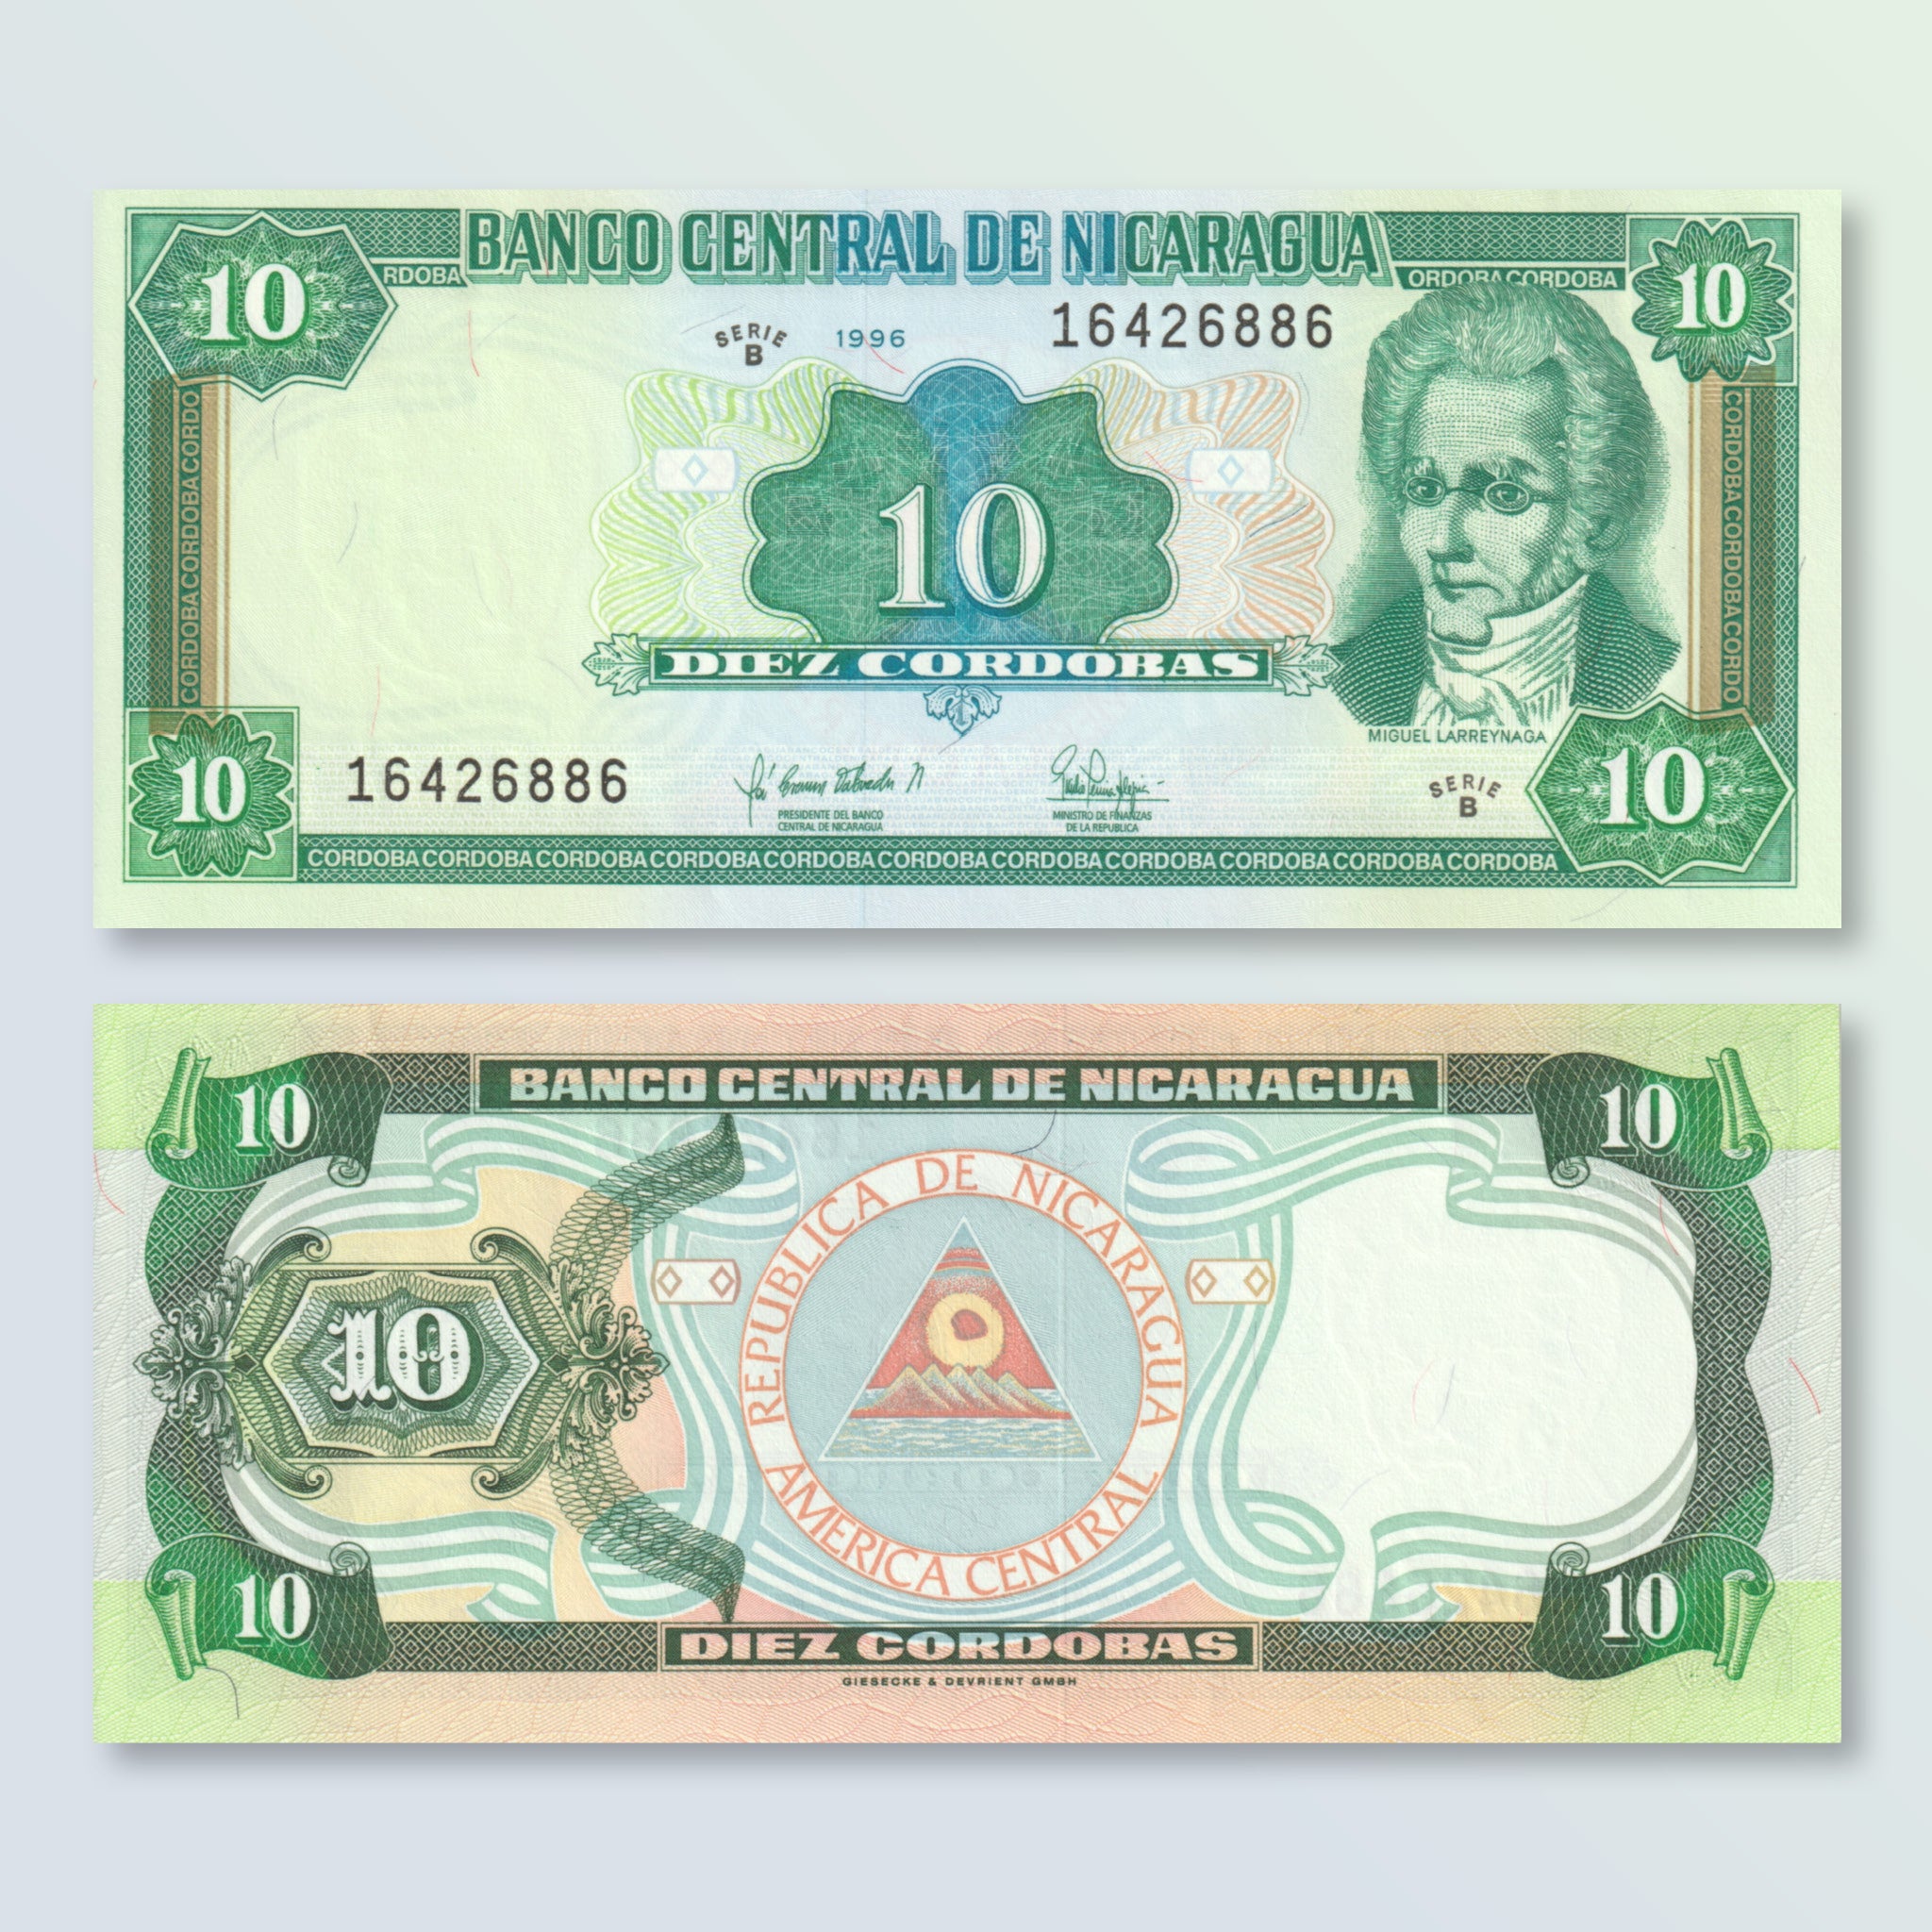 Nicaragua 10 Córdobas, 1996, B477a, P181, UNC - Robert's World Money - World Banknotes